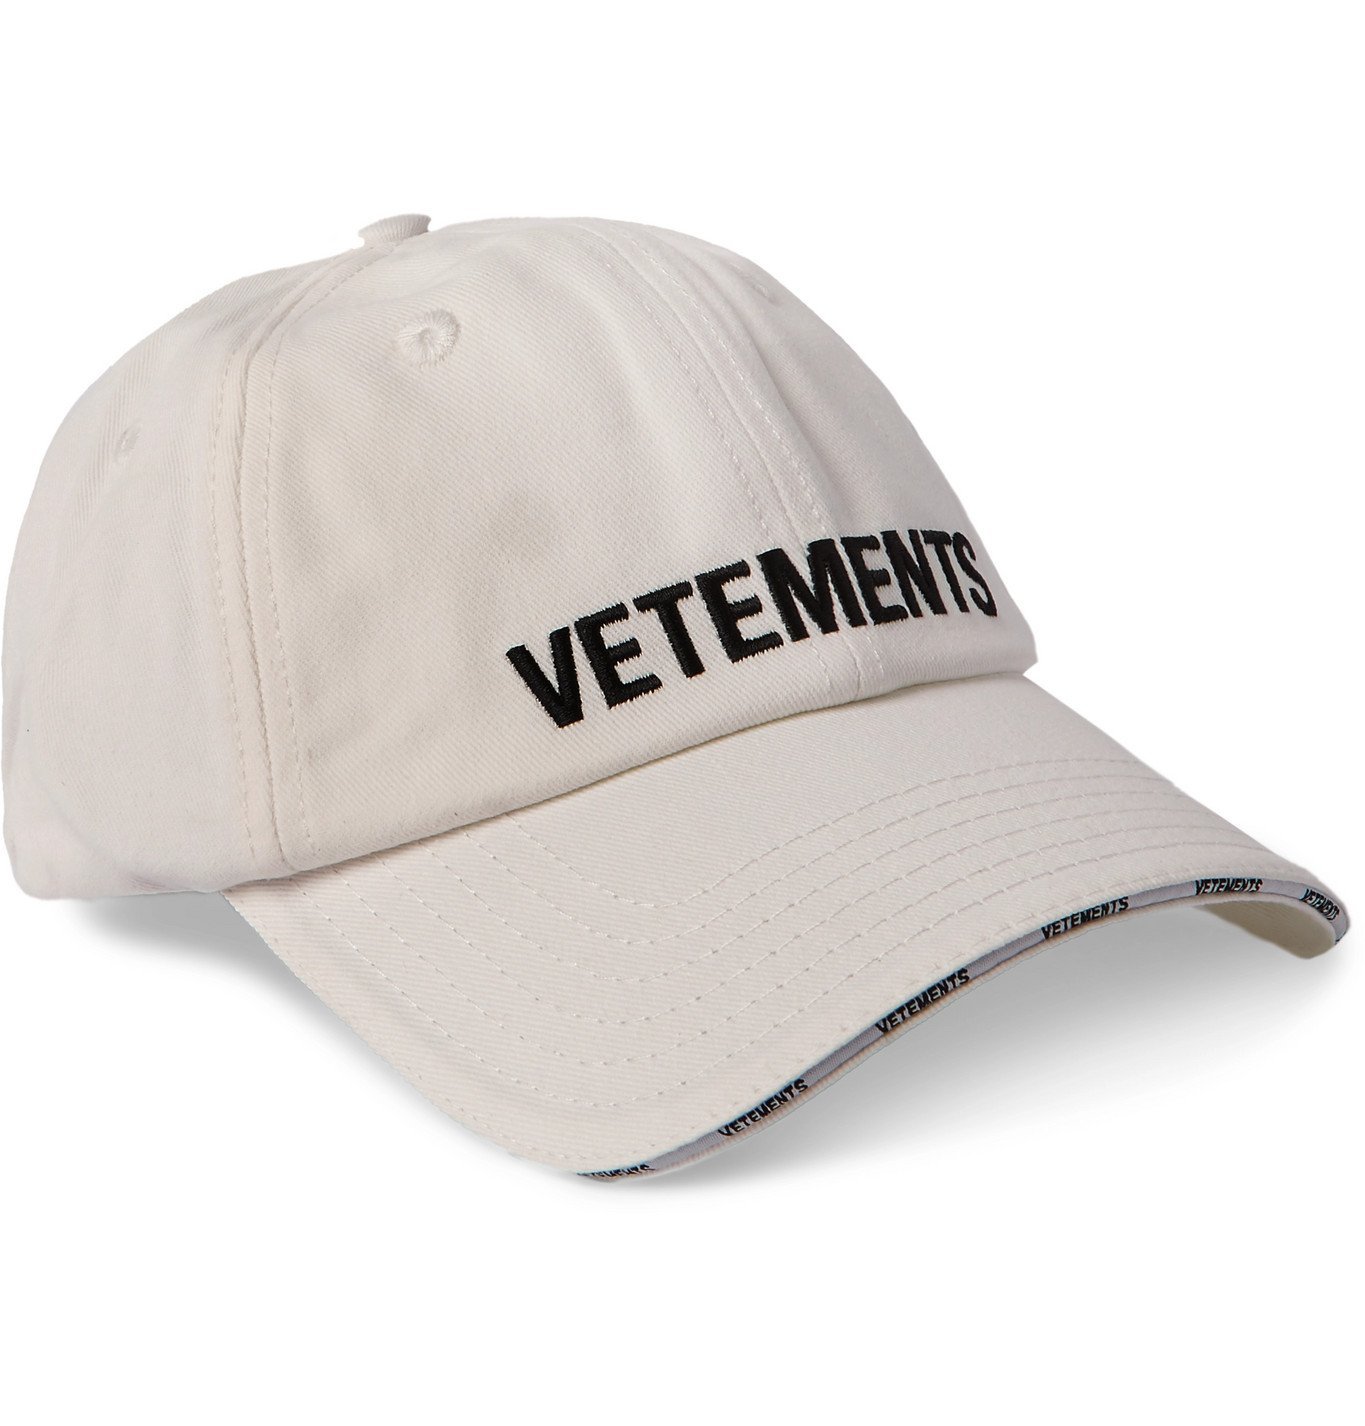 Vetements - Logo-Embroidered Cotton-Twill Baseball Cap - White Vetements